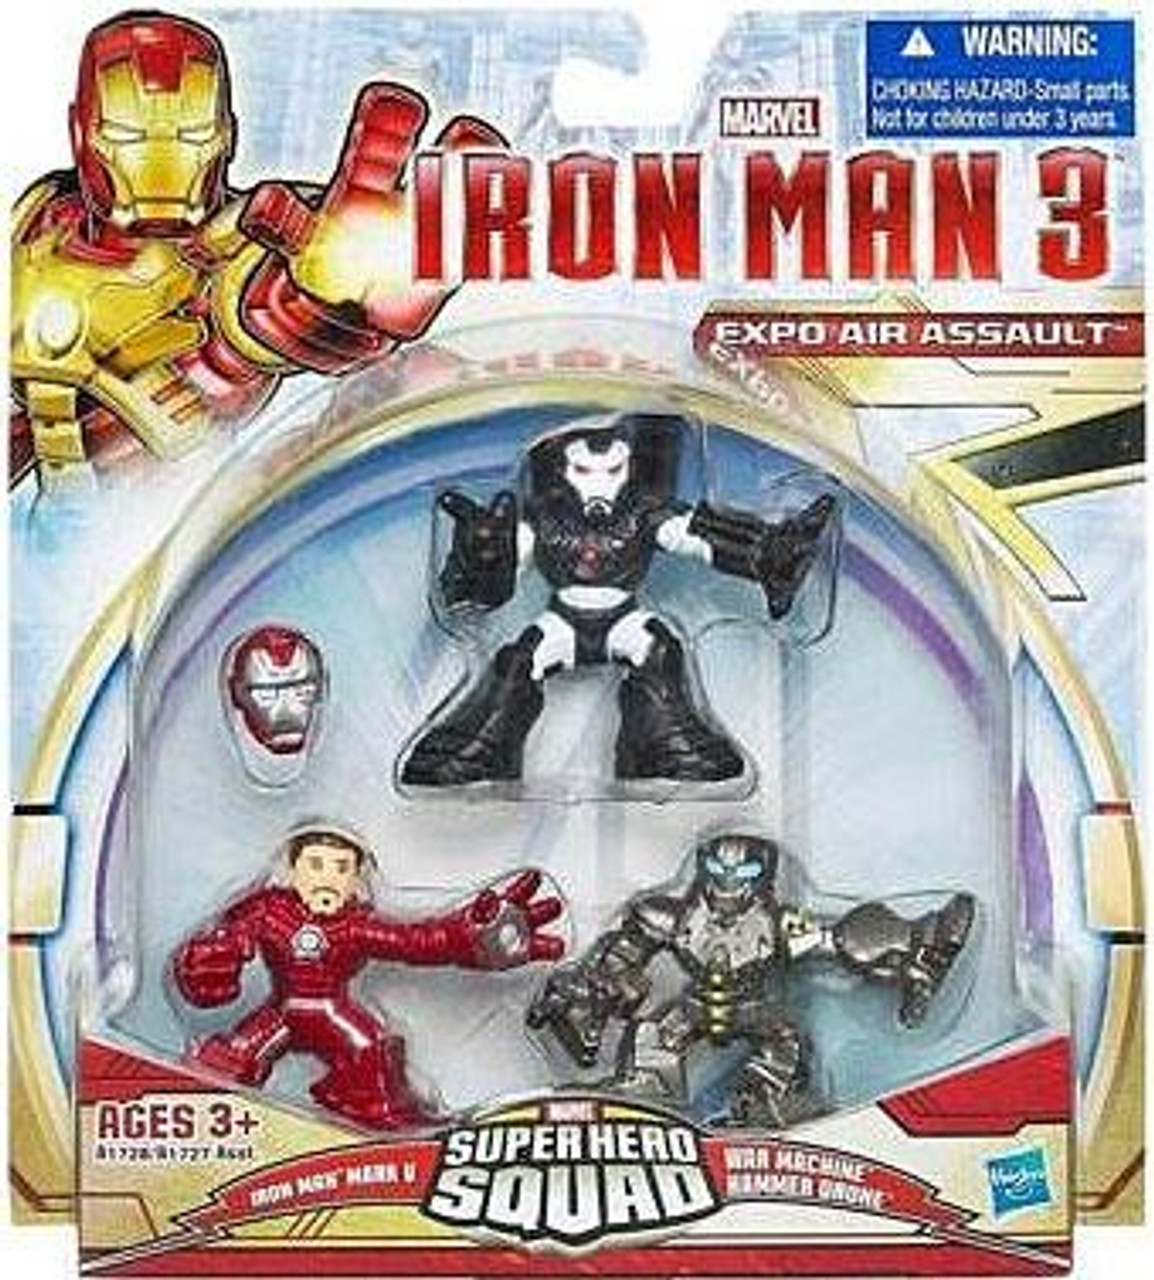 Iron Man 3 Superhero Squad Expo Air Assault Action Figure 3 Pack Damaged Package Hasbro Toys Toywiz - roblox iron man 3 theme